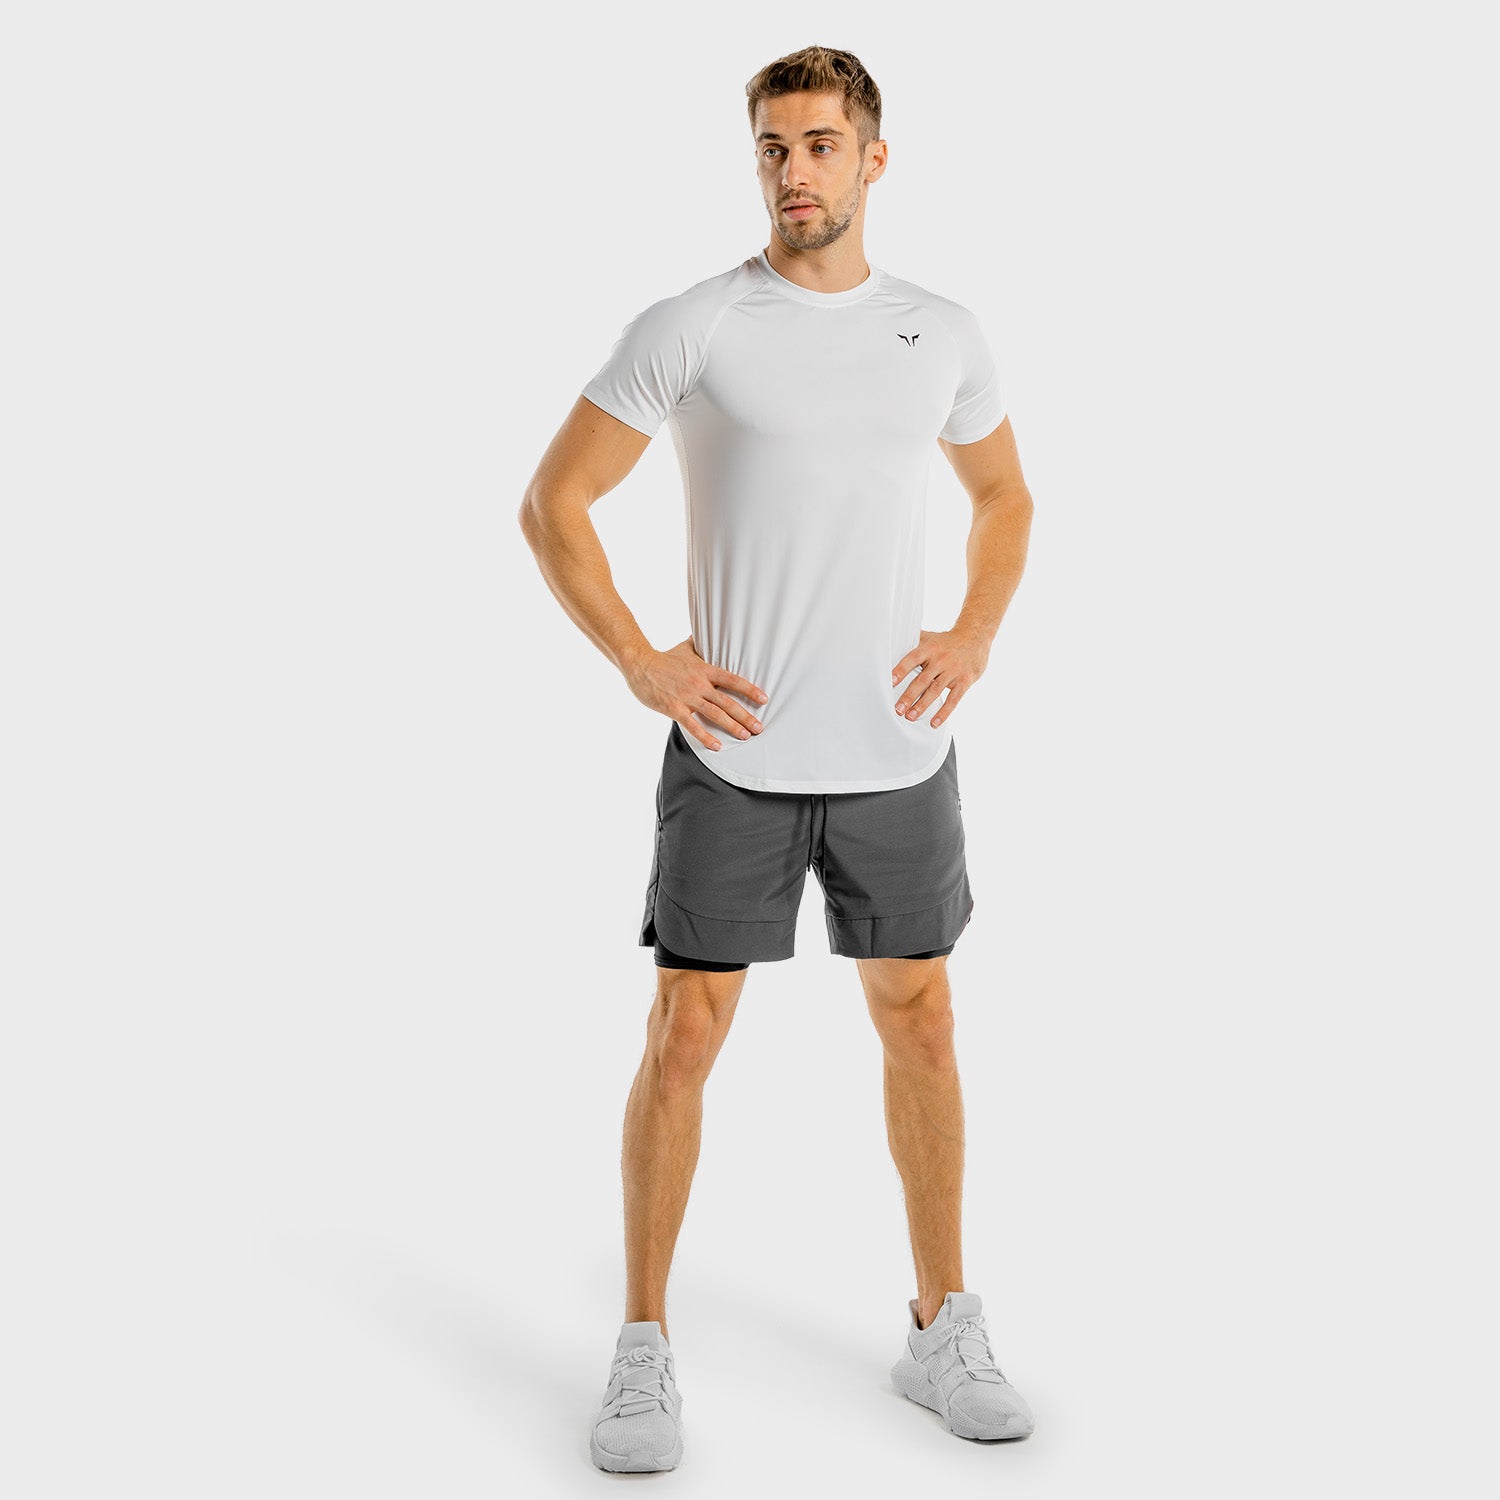 squatwolf-gym-wear-limitless-razor-tee-white-workout-shirts-for-men